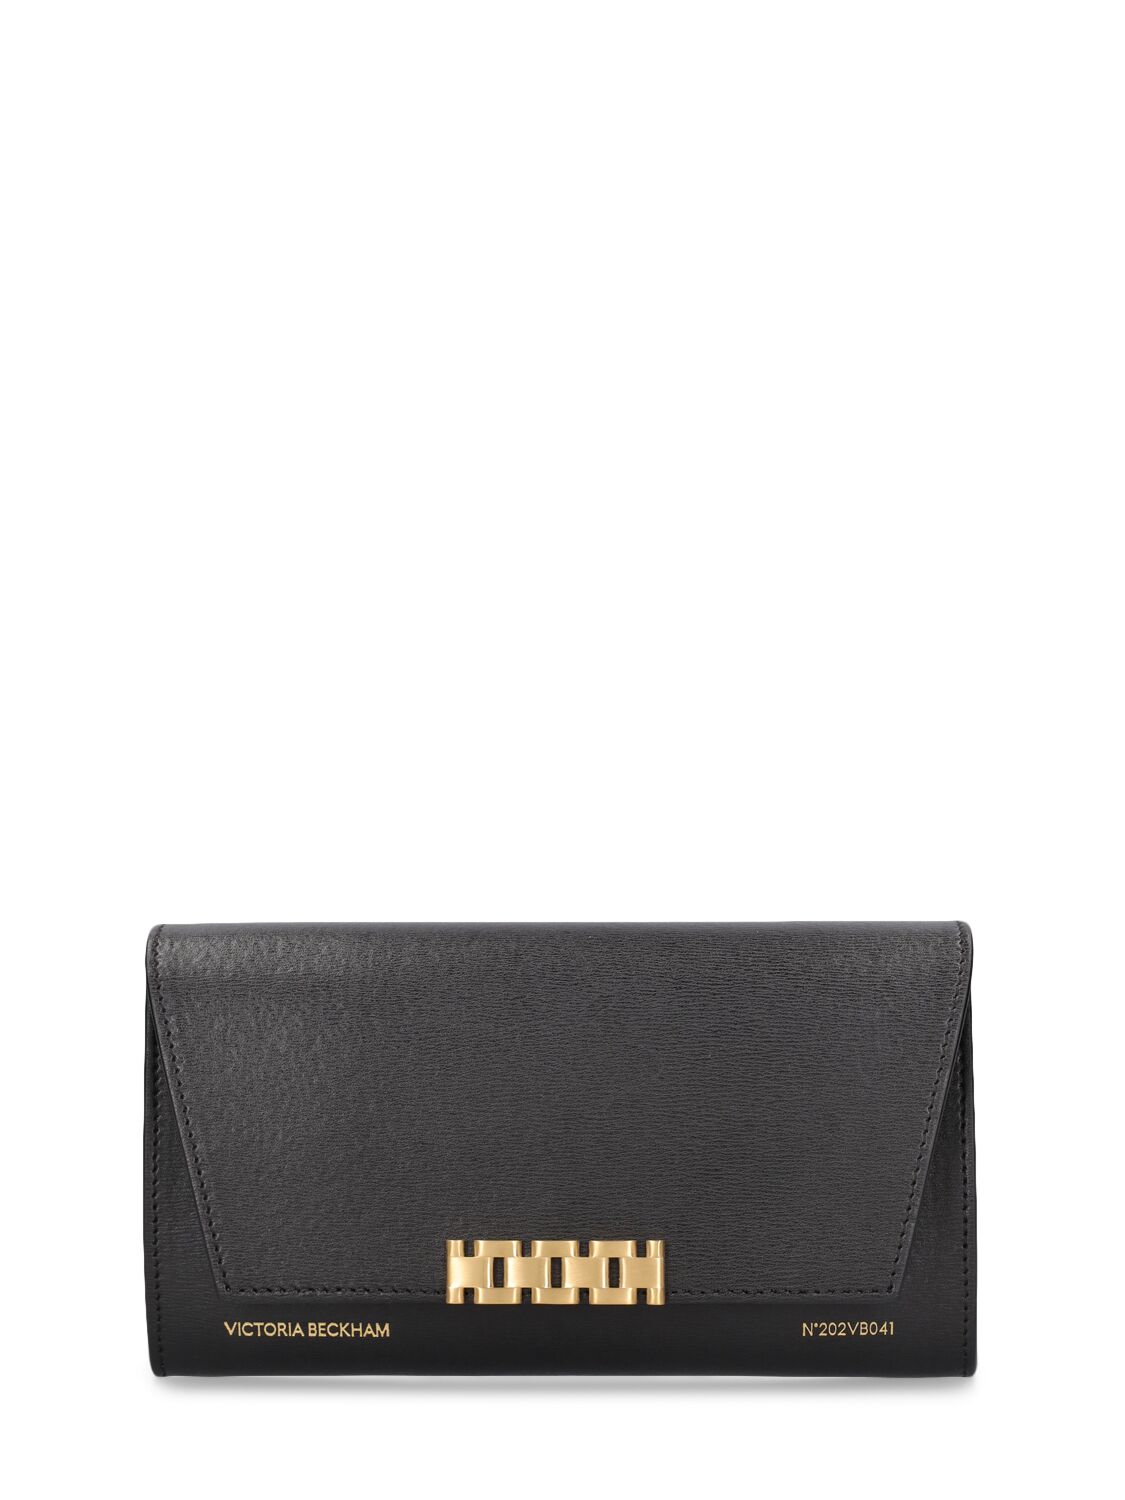 Victoria Beckham Leather Wallet W/chain In Brown